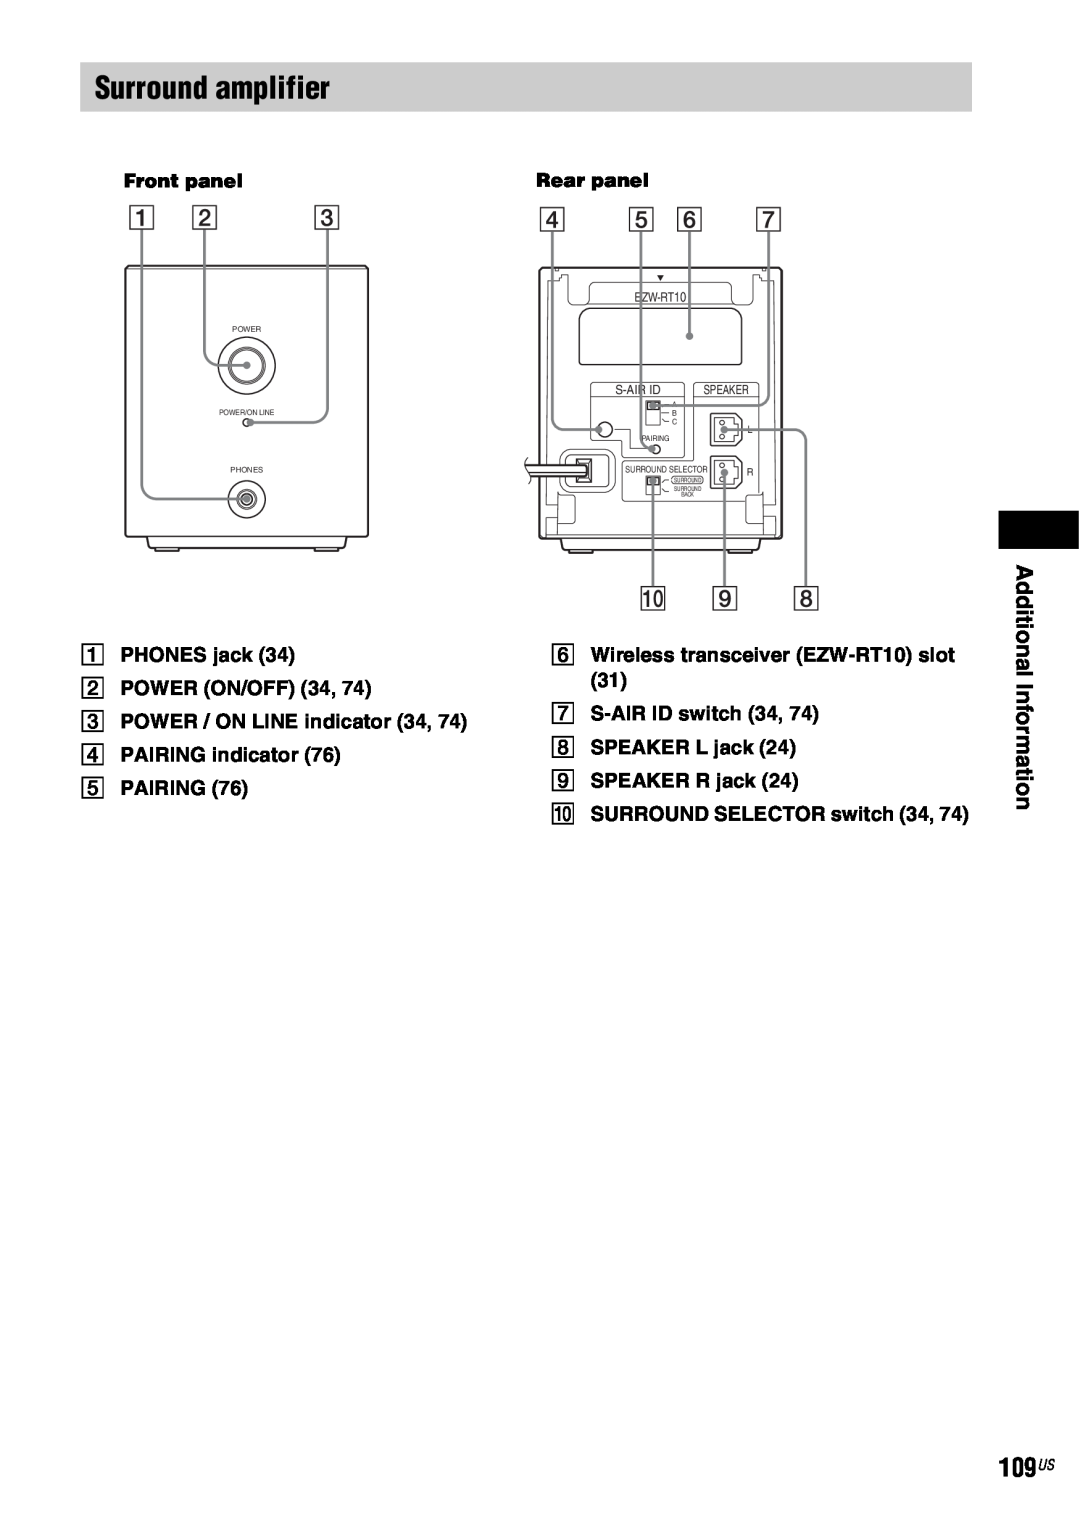 Sony DAV-HDX686W Surround amplifier, Additional, APHONES jack BPOWER ON/OFF, Epairing, Wireless transceiver EZW-RT10slot 